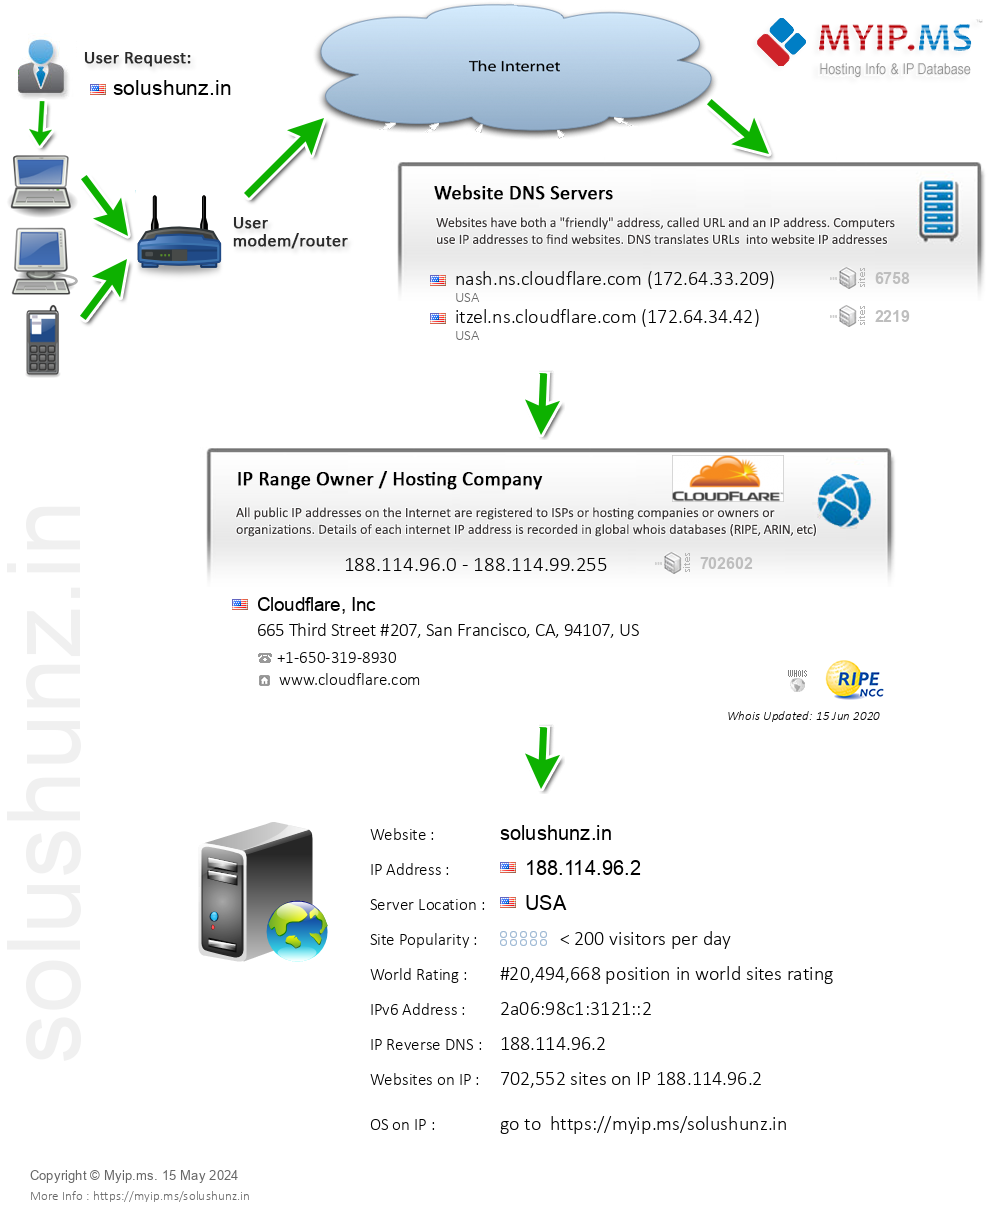 Solushunz.in - Website Hosting Visual IP Diagram